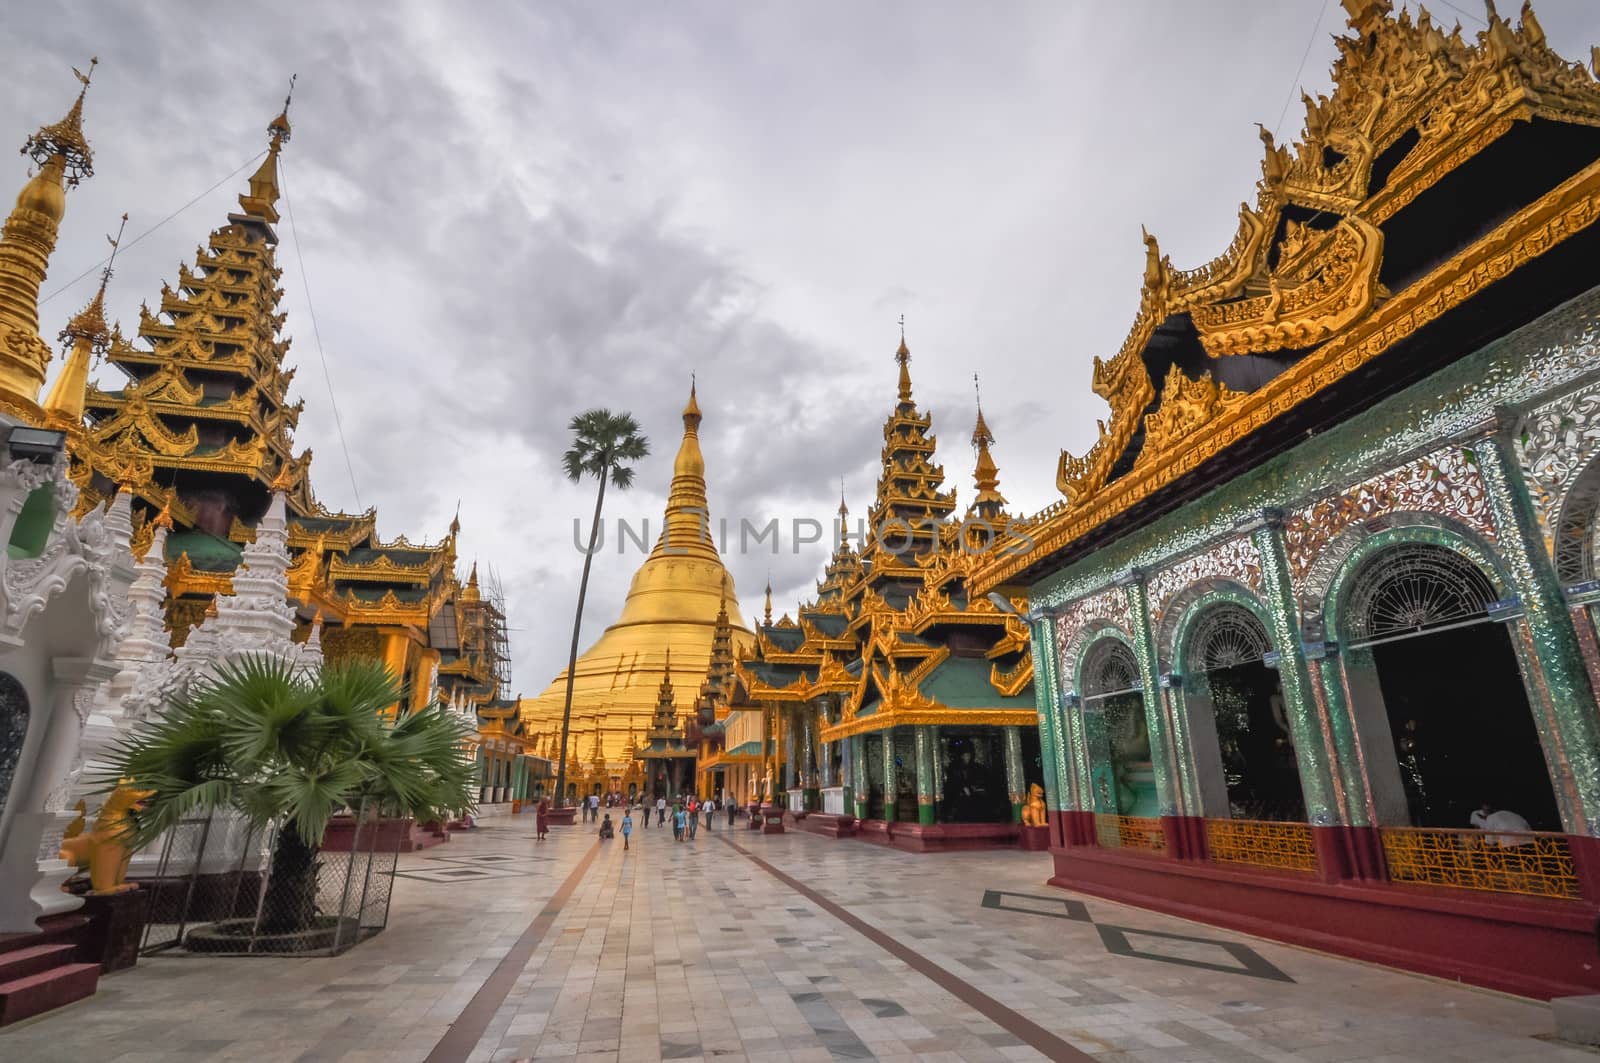 Shwedagon Pagoda Temple in Yangon, Myanmar (Burma)